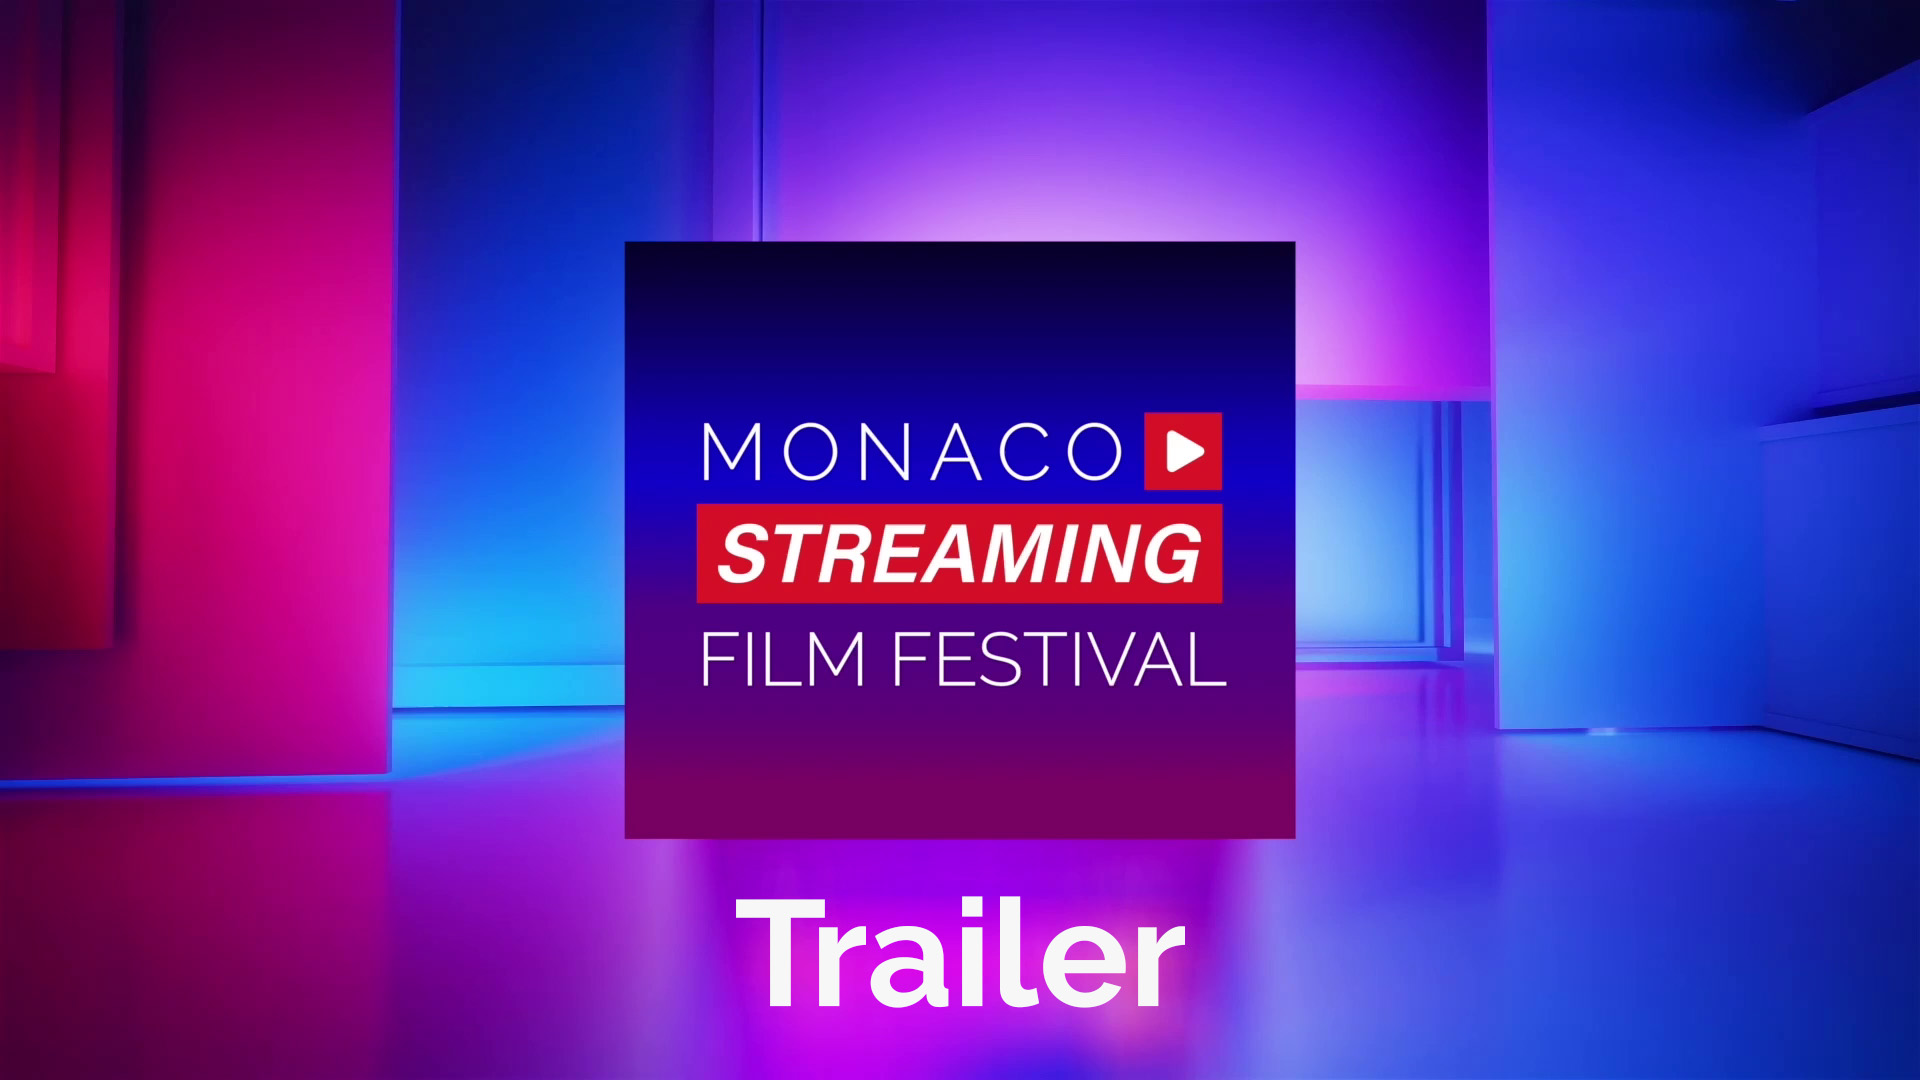 Monaco Streaming Film Festival 2022 Trailer